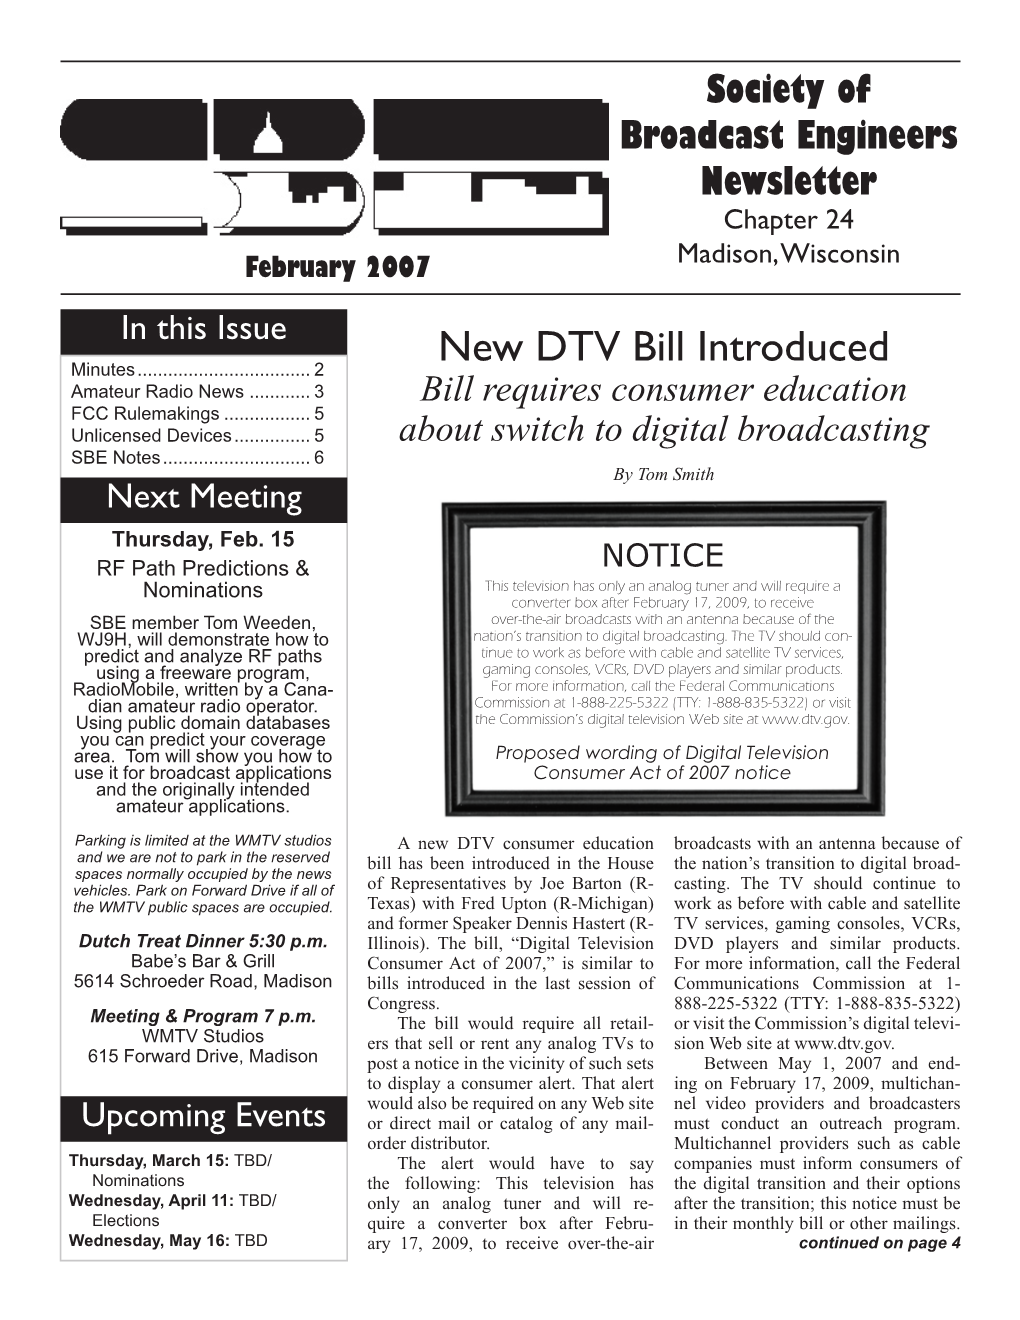 New DTV Bill Introduced Amateur Radio News